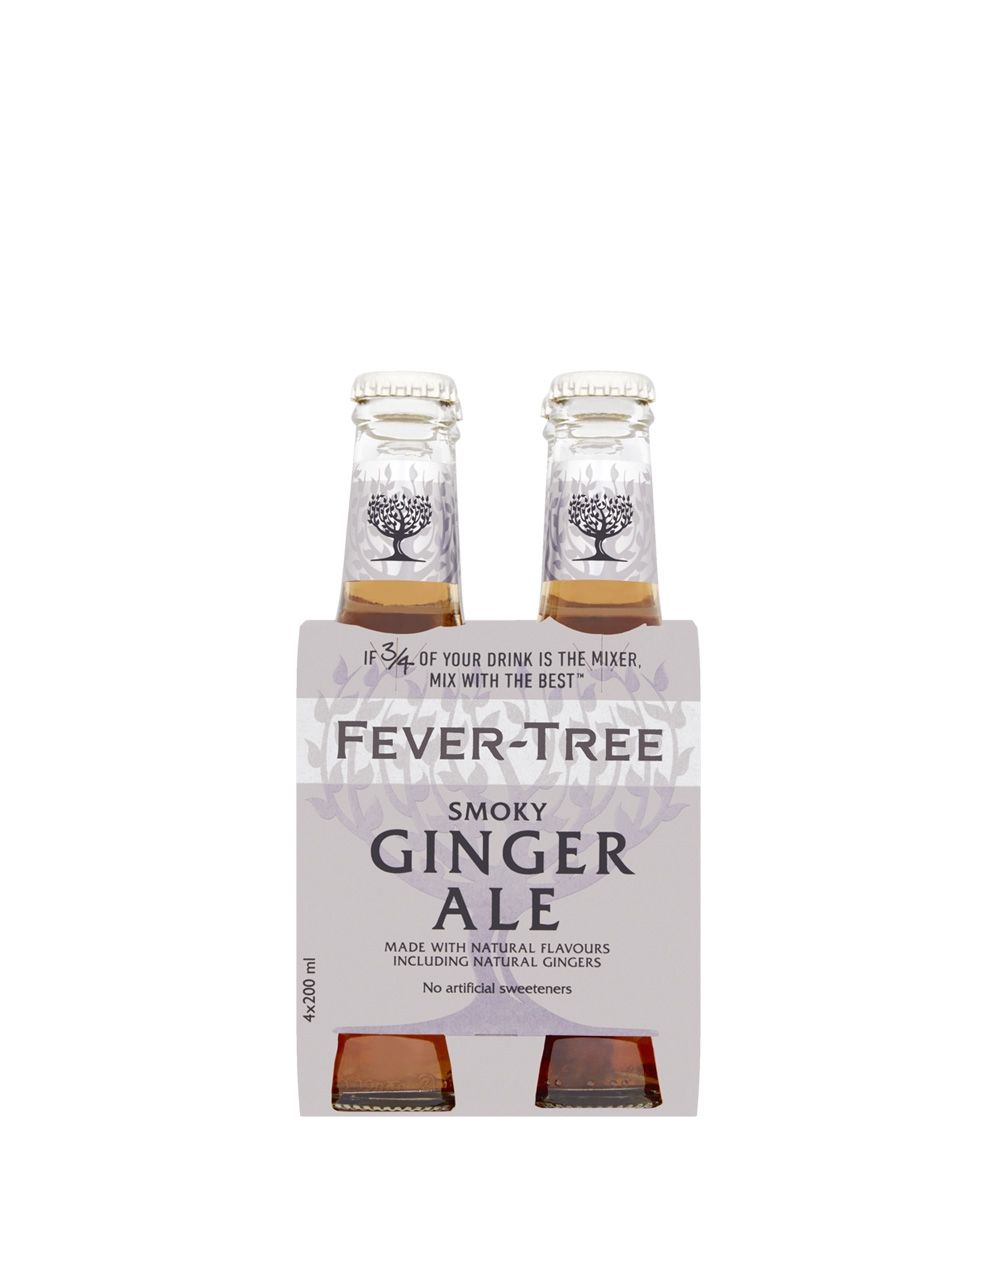 Fever Tree Ginger Beer Nonalcoholic 4x200 mL